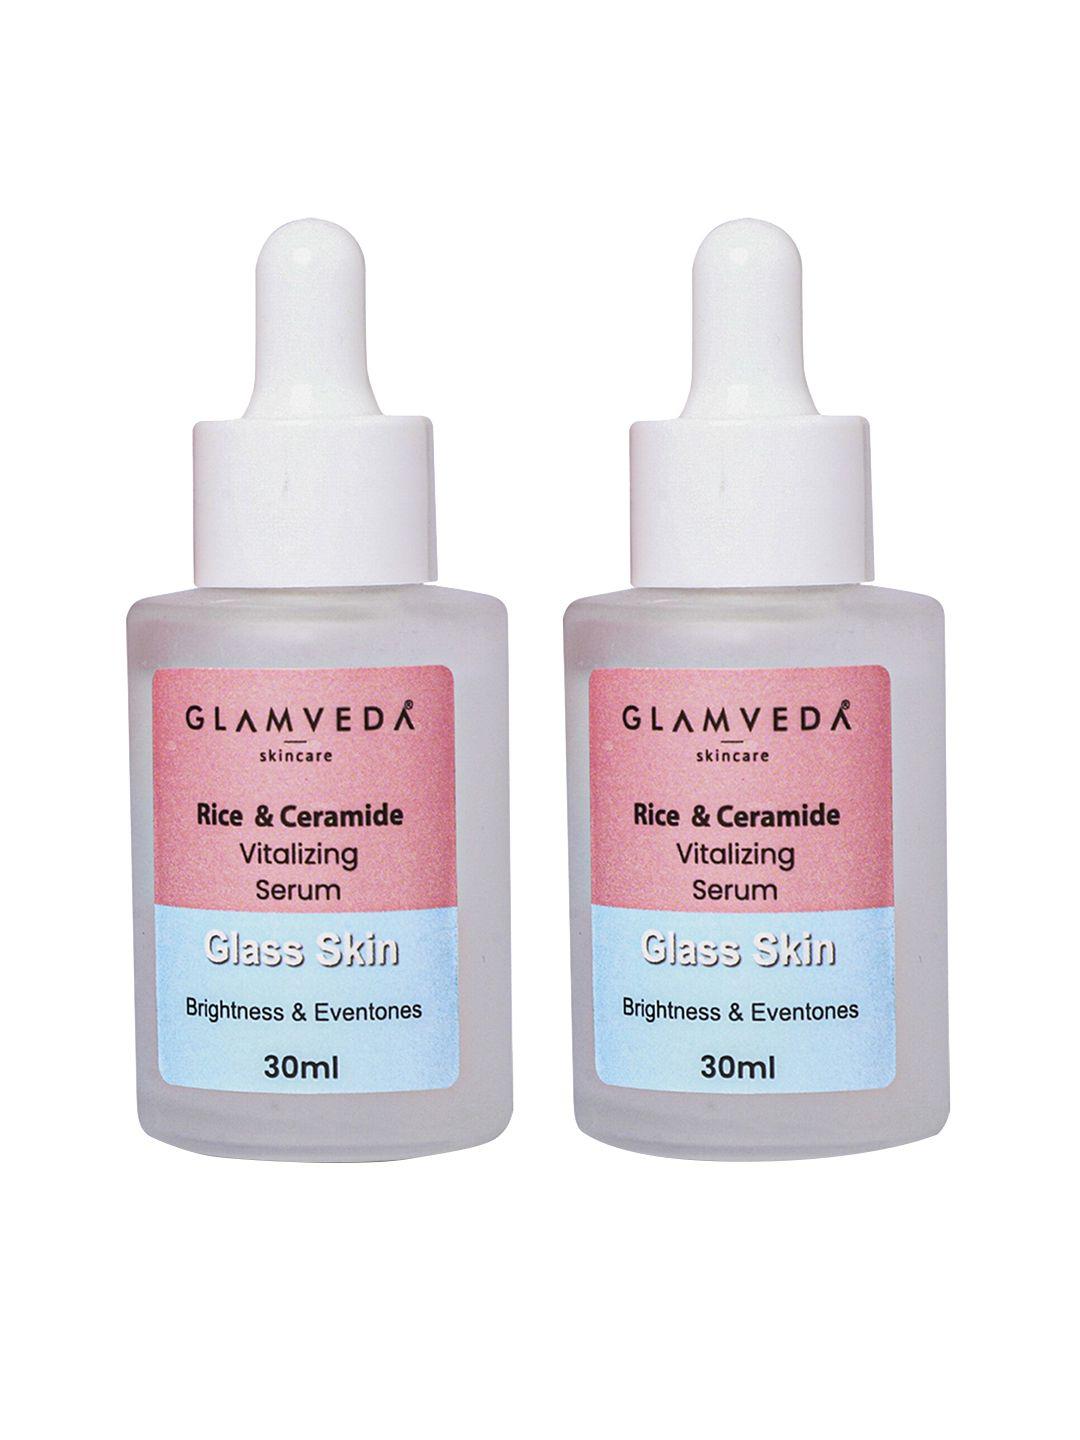 glamveda set of 2 glass skin korean rice water & ceramide vitalizing serum - 30ml each